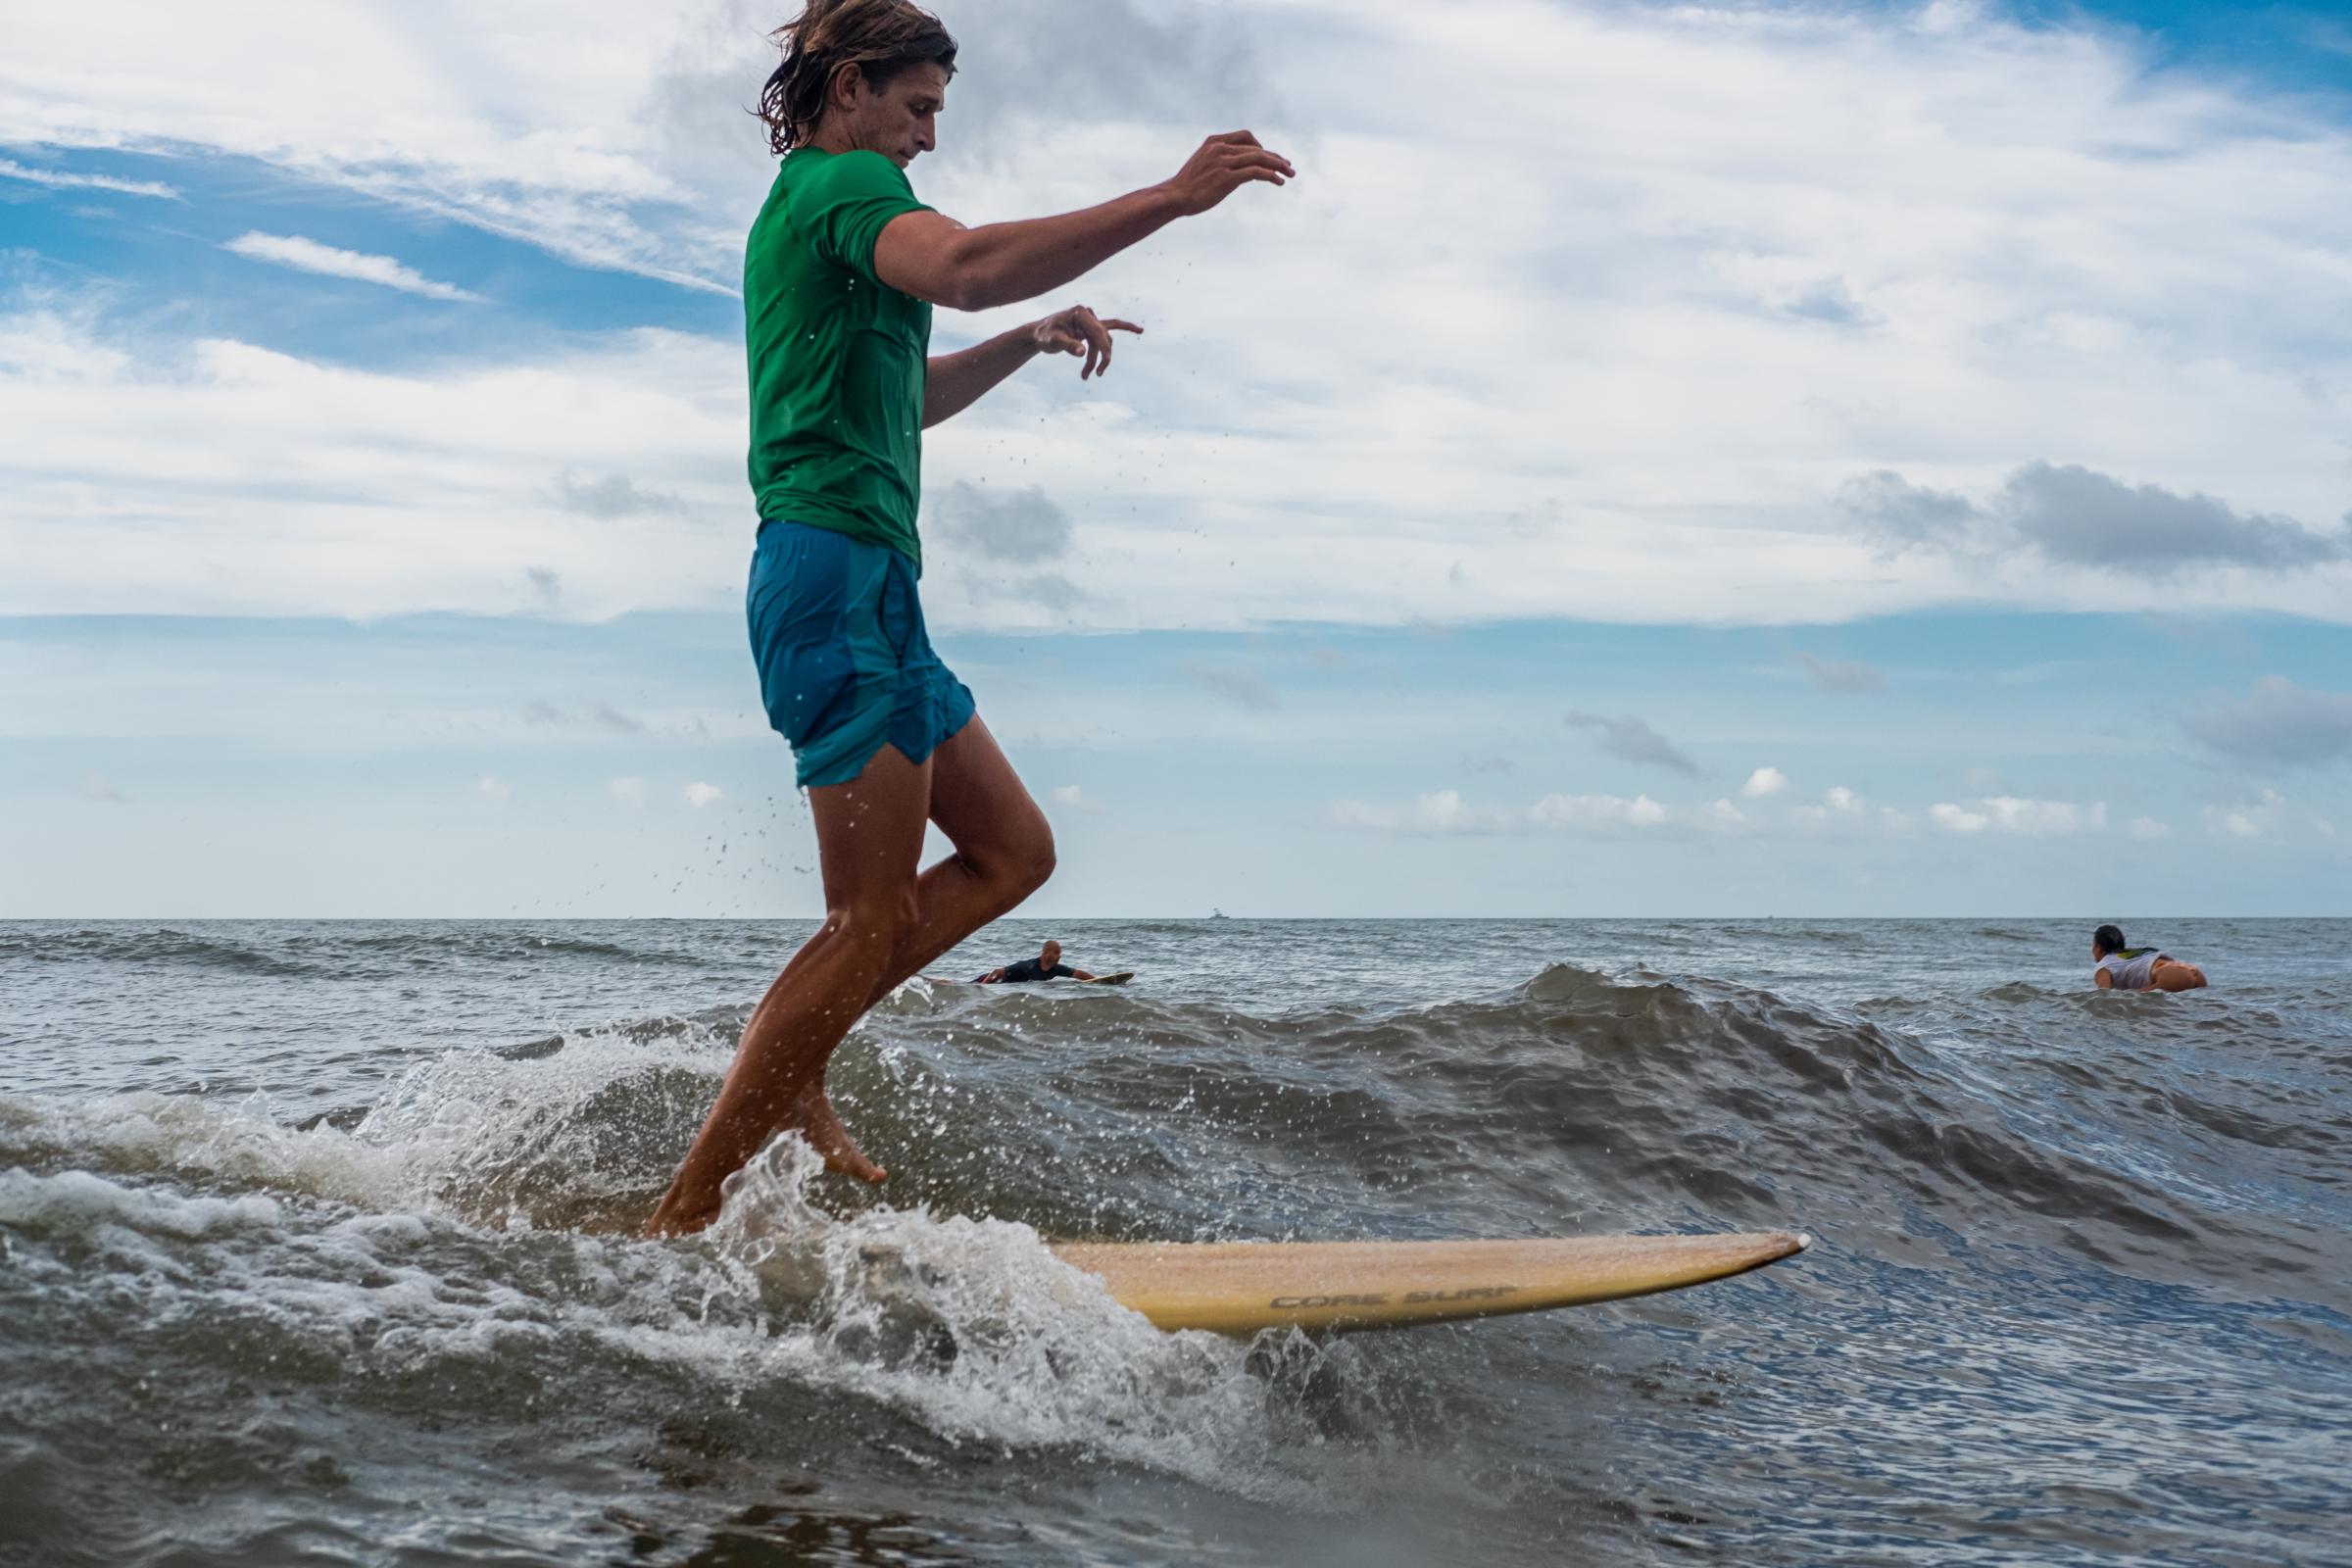 Cape Canaveral, FL. Hotdogzonastix Surf Contest July 2021 -  Keller Shogren walking on a 1960s longboard at the Third...